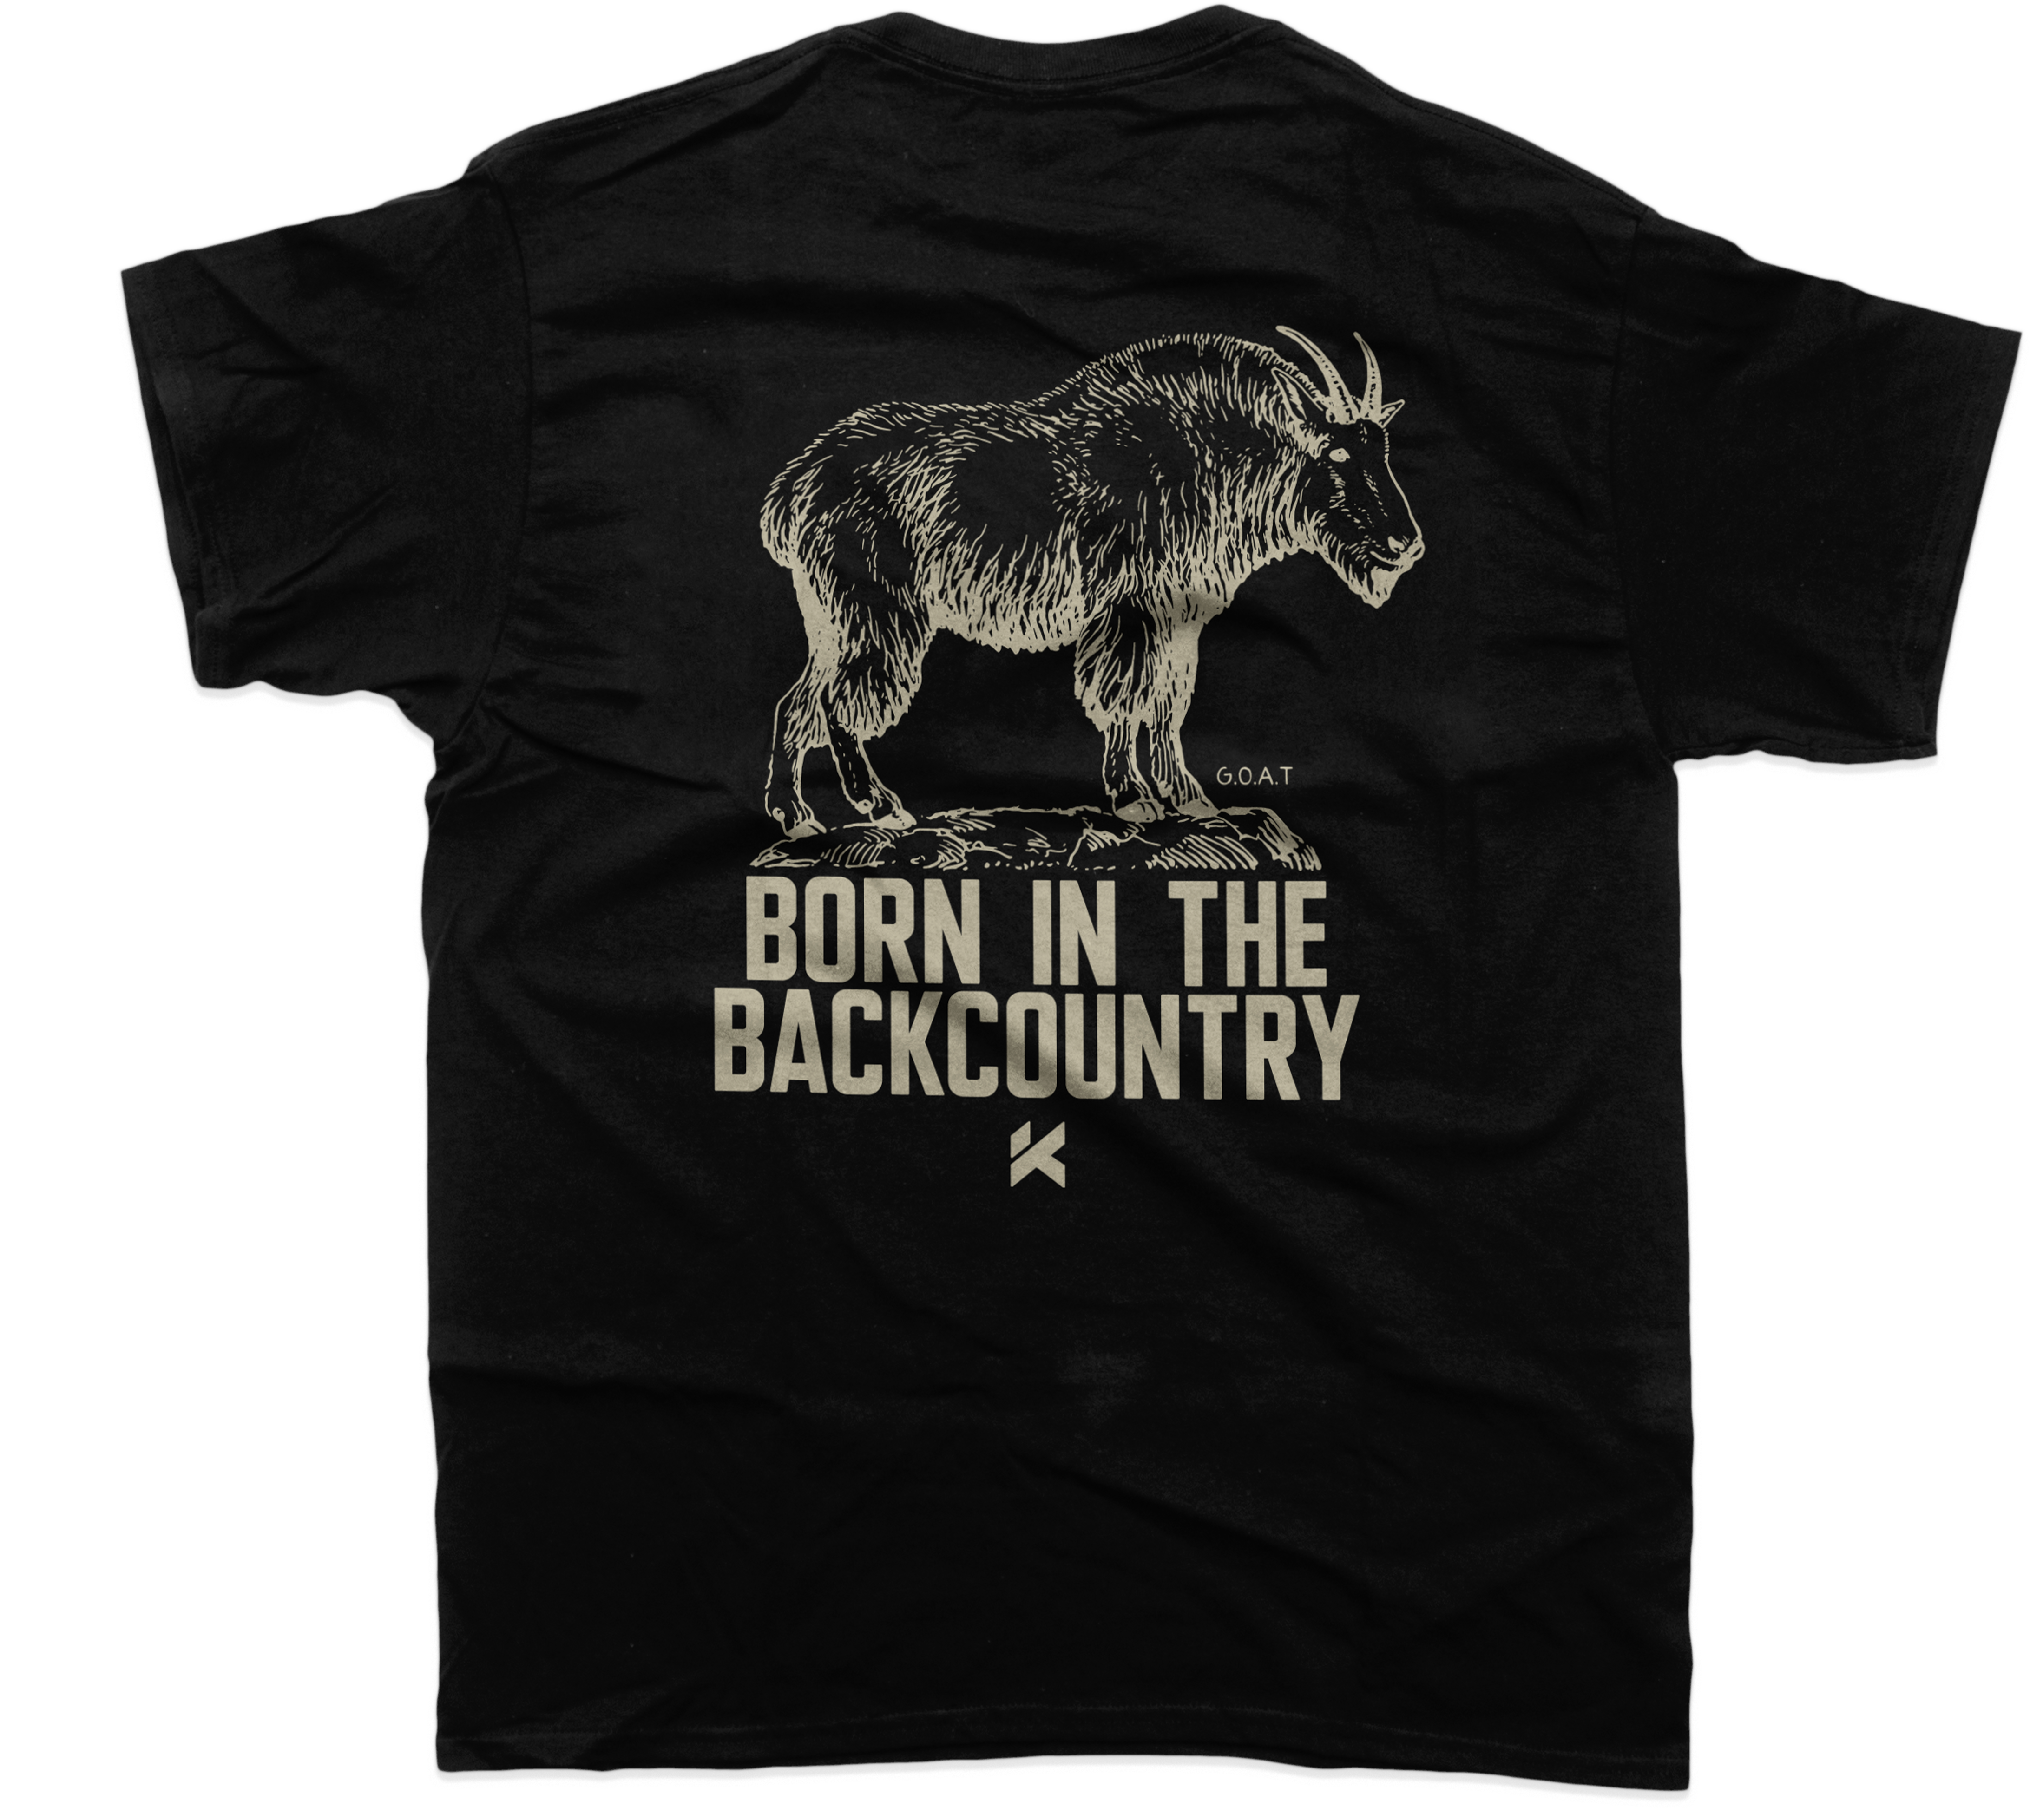 Backcountry Goat